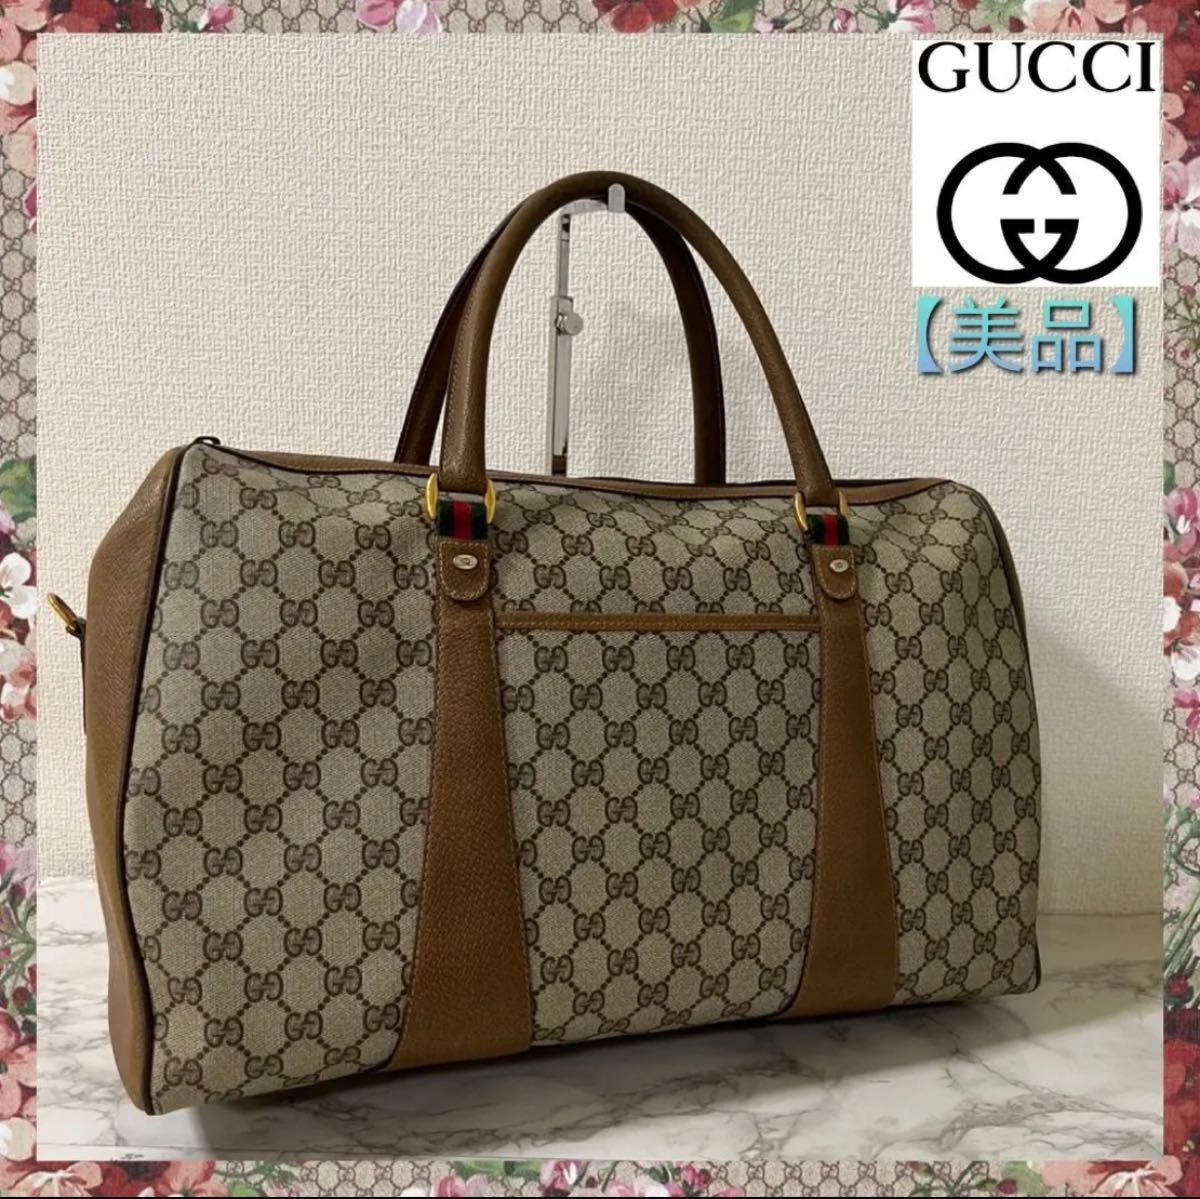 Gucci Outlet Shopping VLOG 30-70% OFF👜👛Orlando Luxury premium outlets  🎒unbox designer sale! 